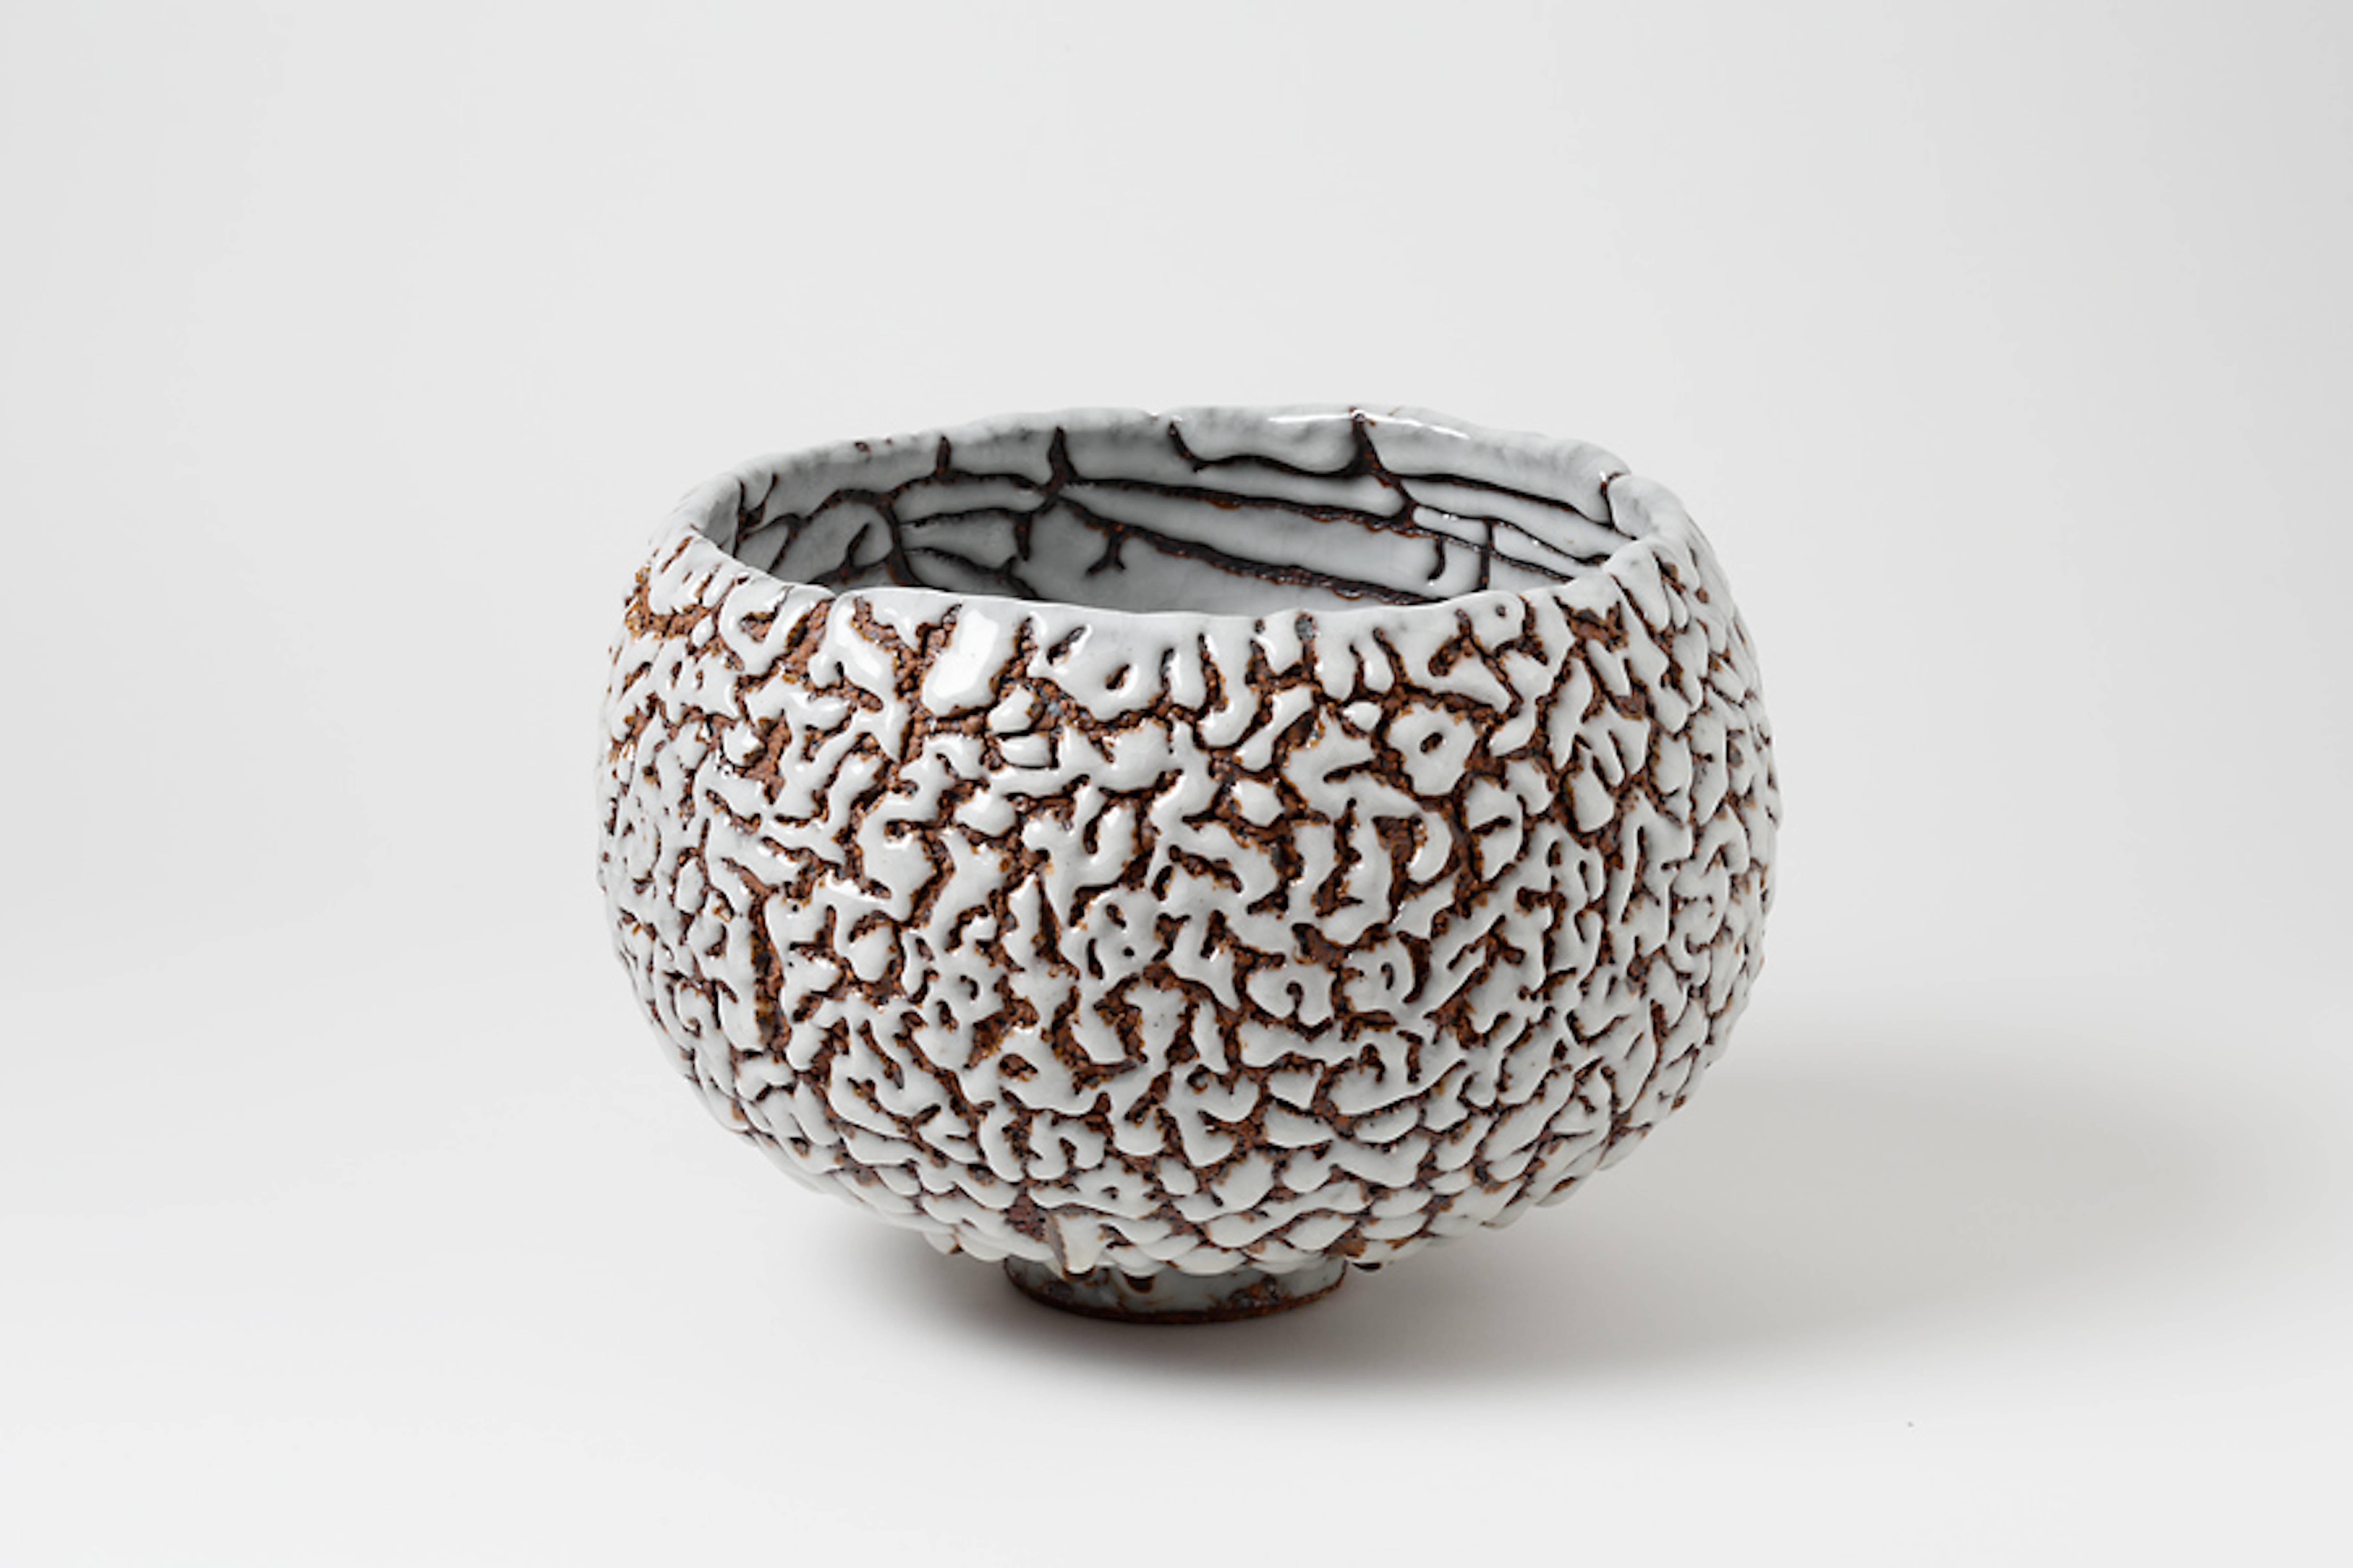 Beaux Arts Contemporary Ceramic Cup by Rozenn Bigot